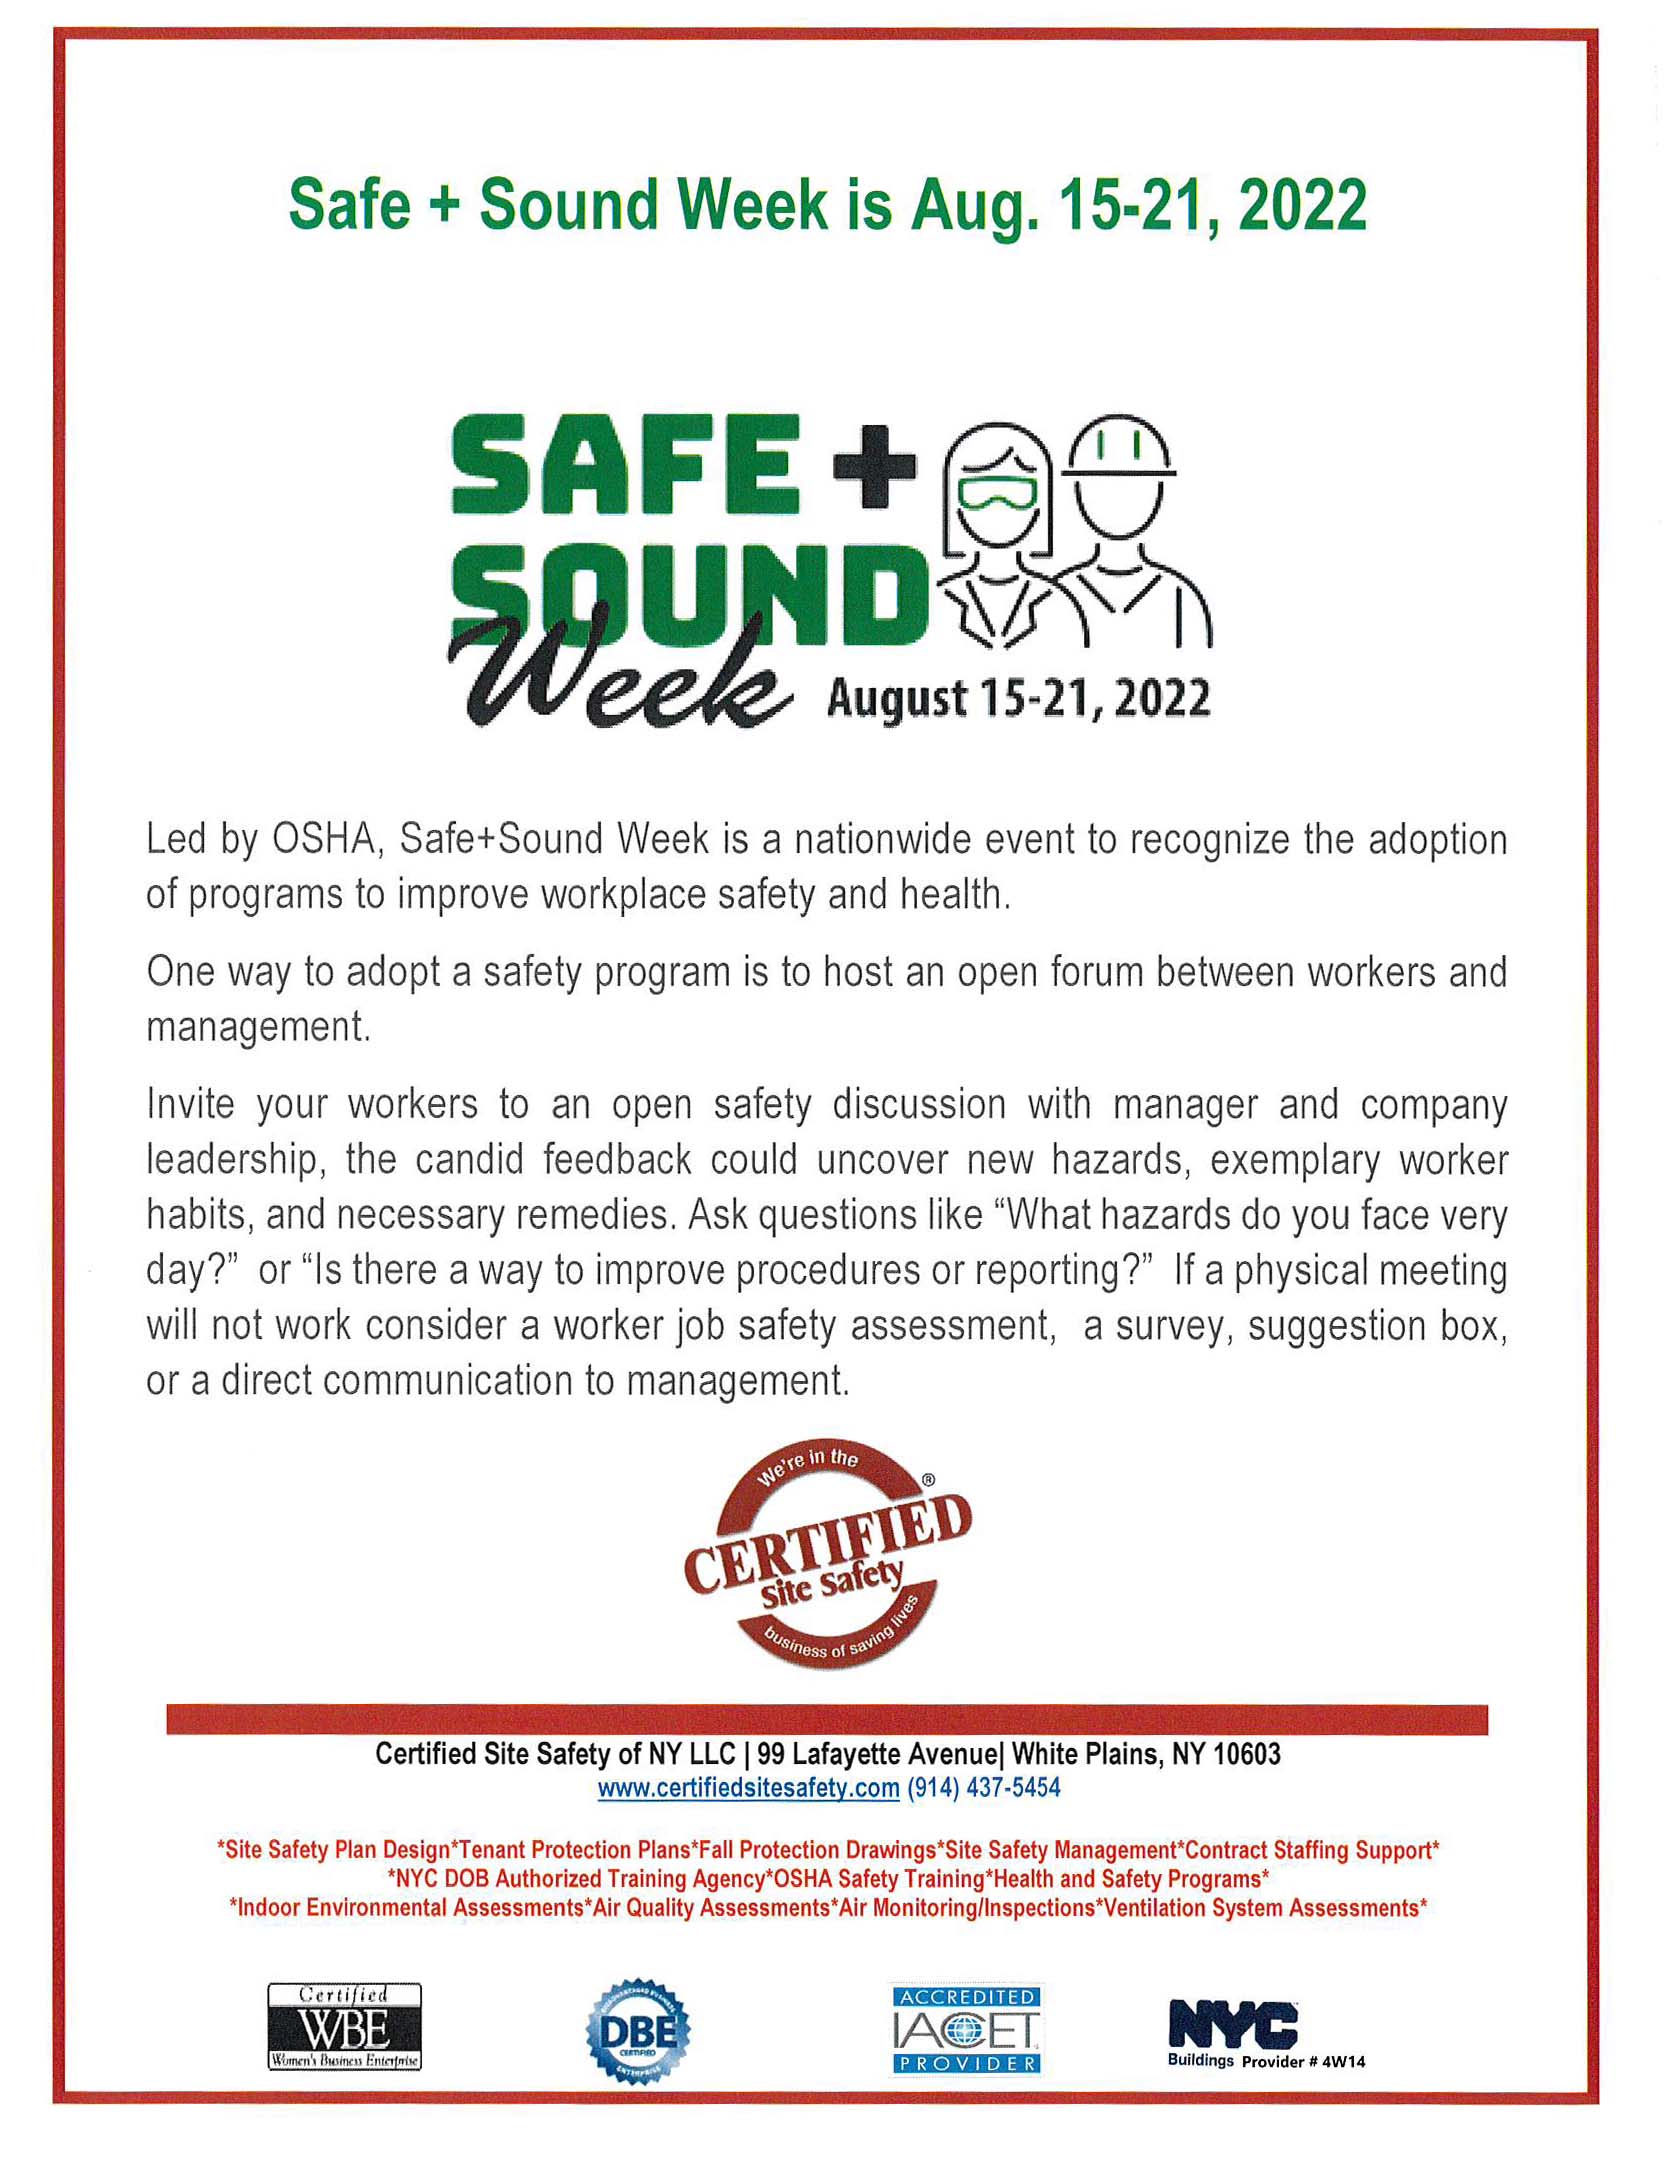 Safe + Sound Week Certified Site Safety